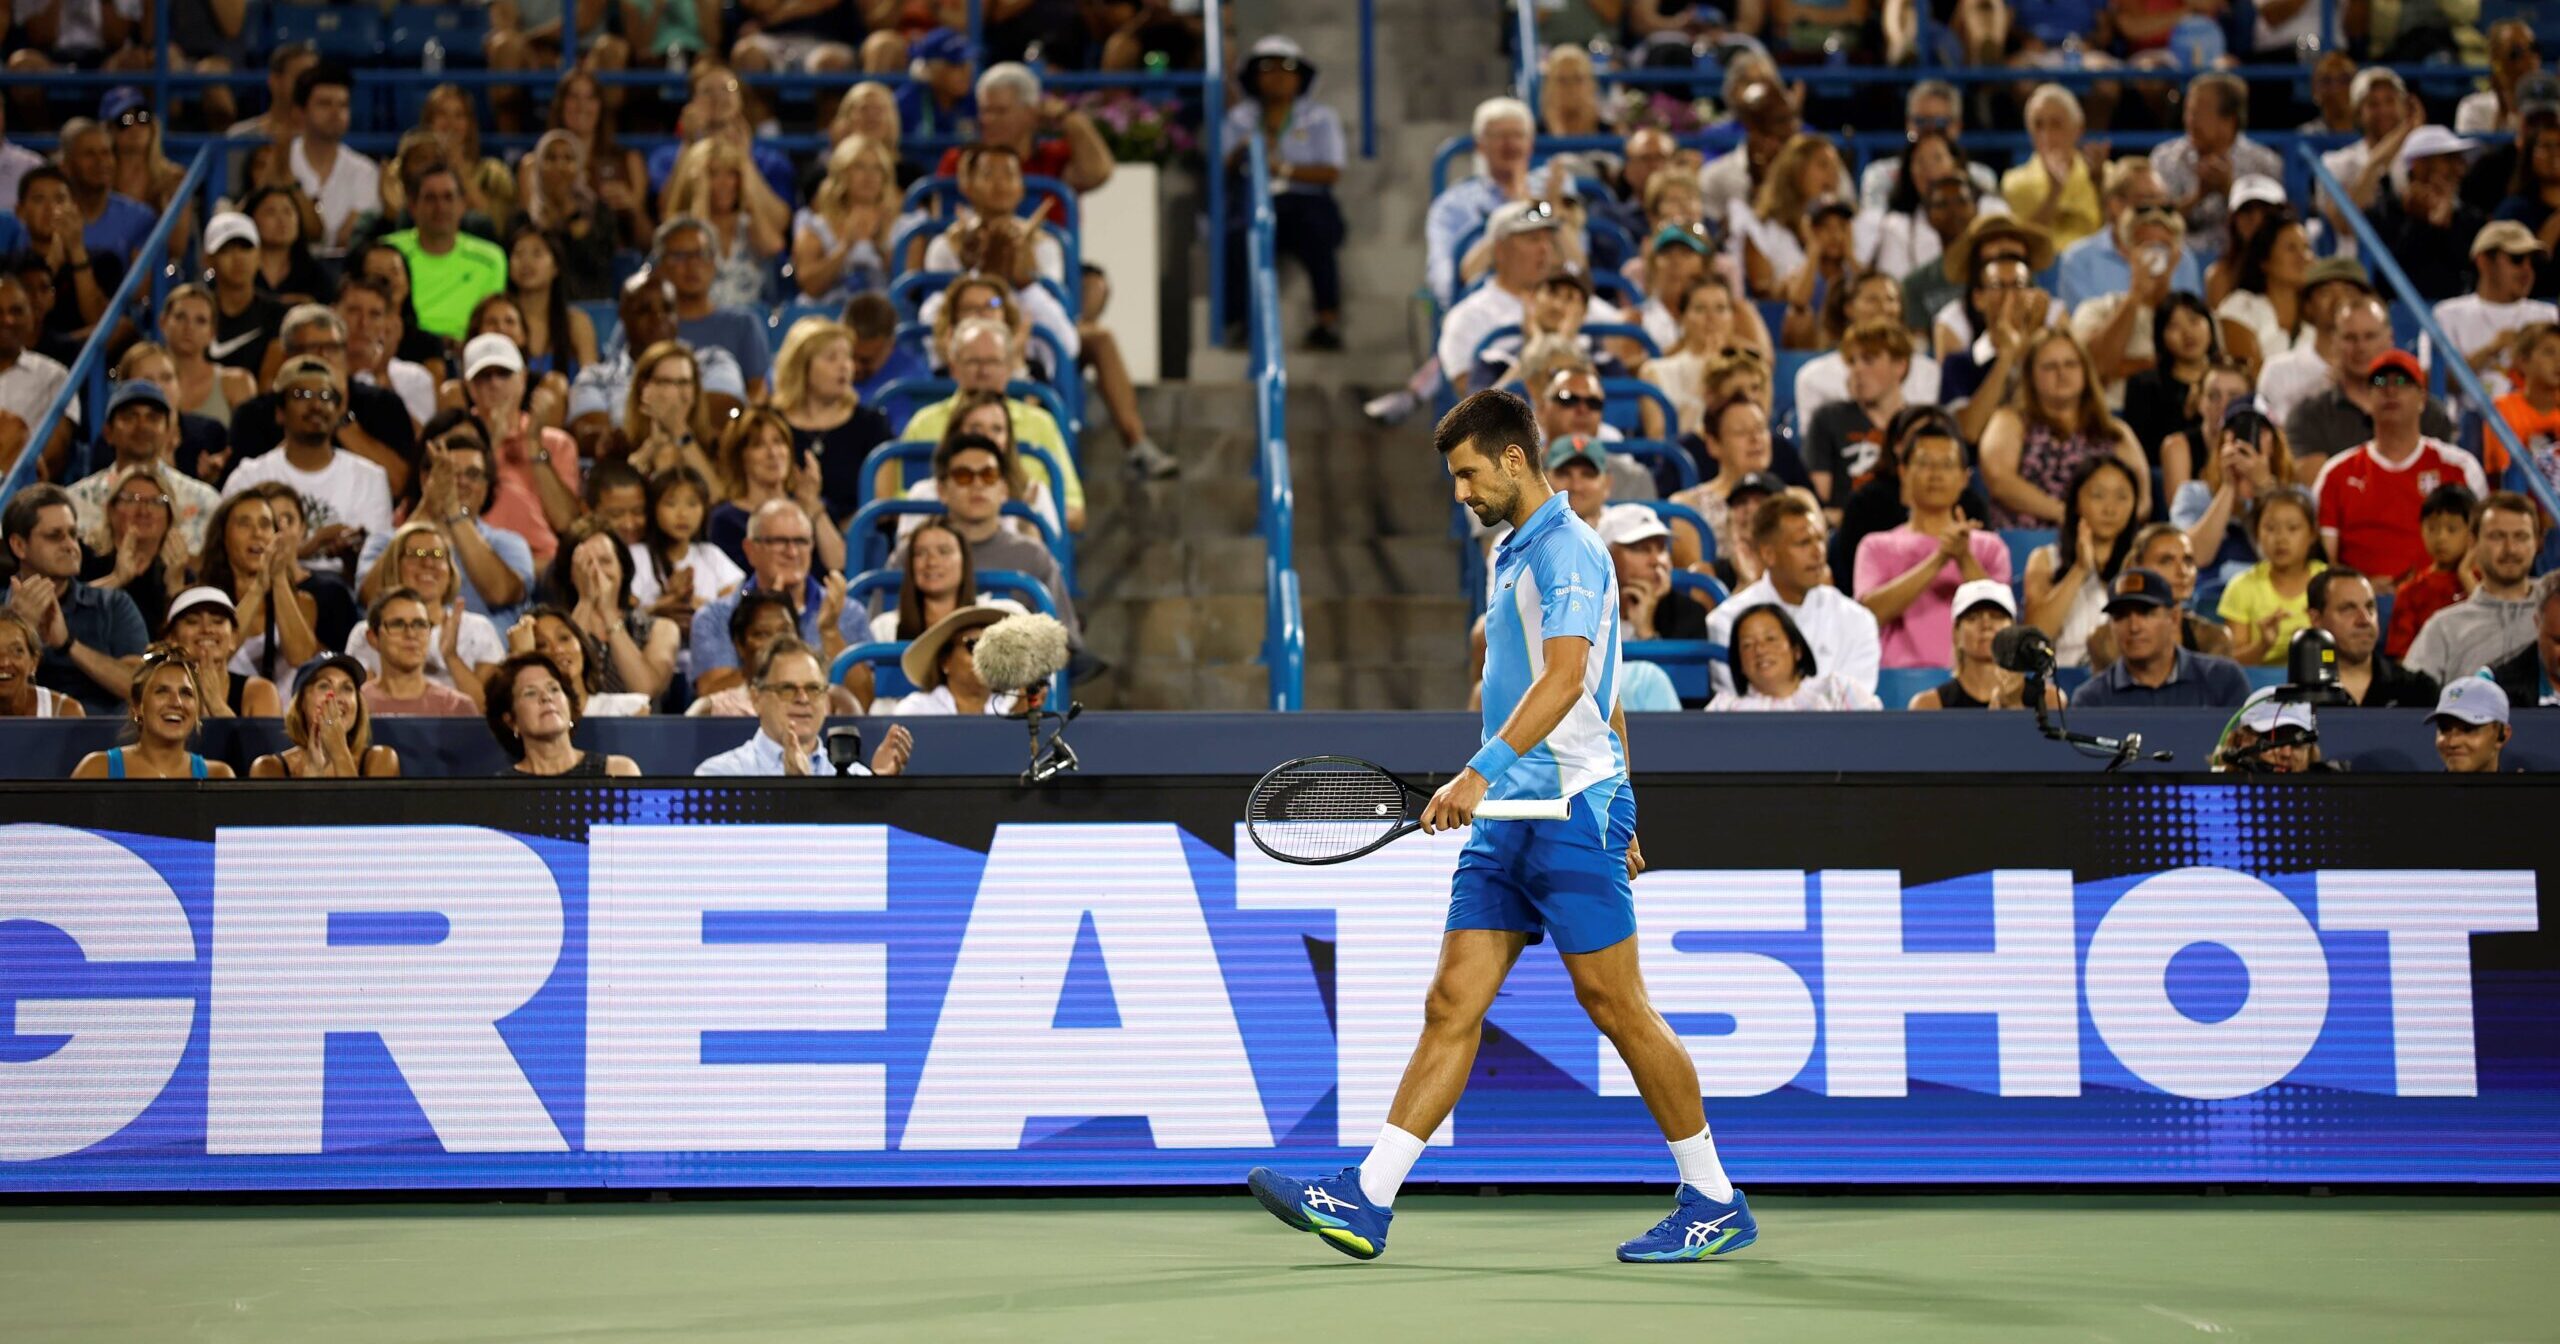 Novak Djokovic walking on a tennis court